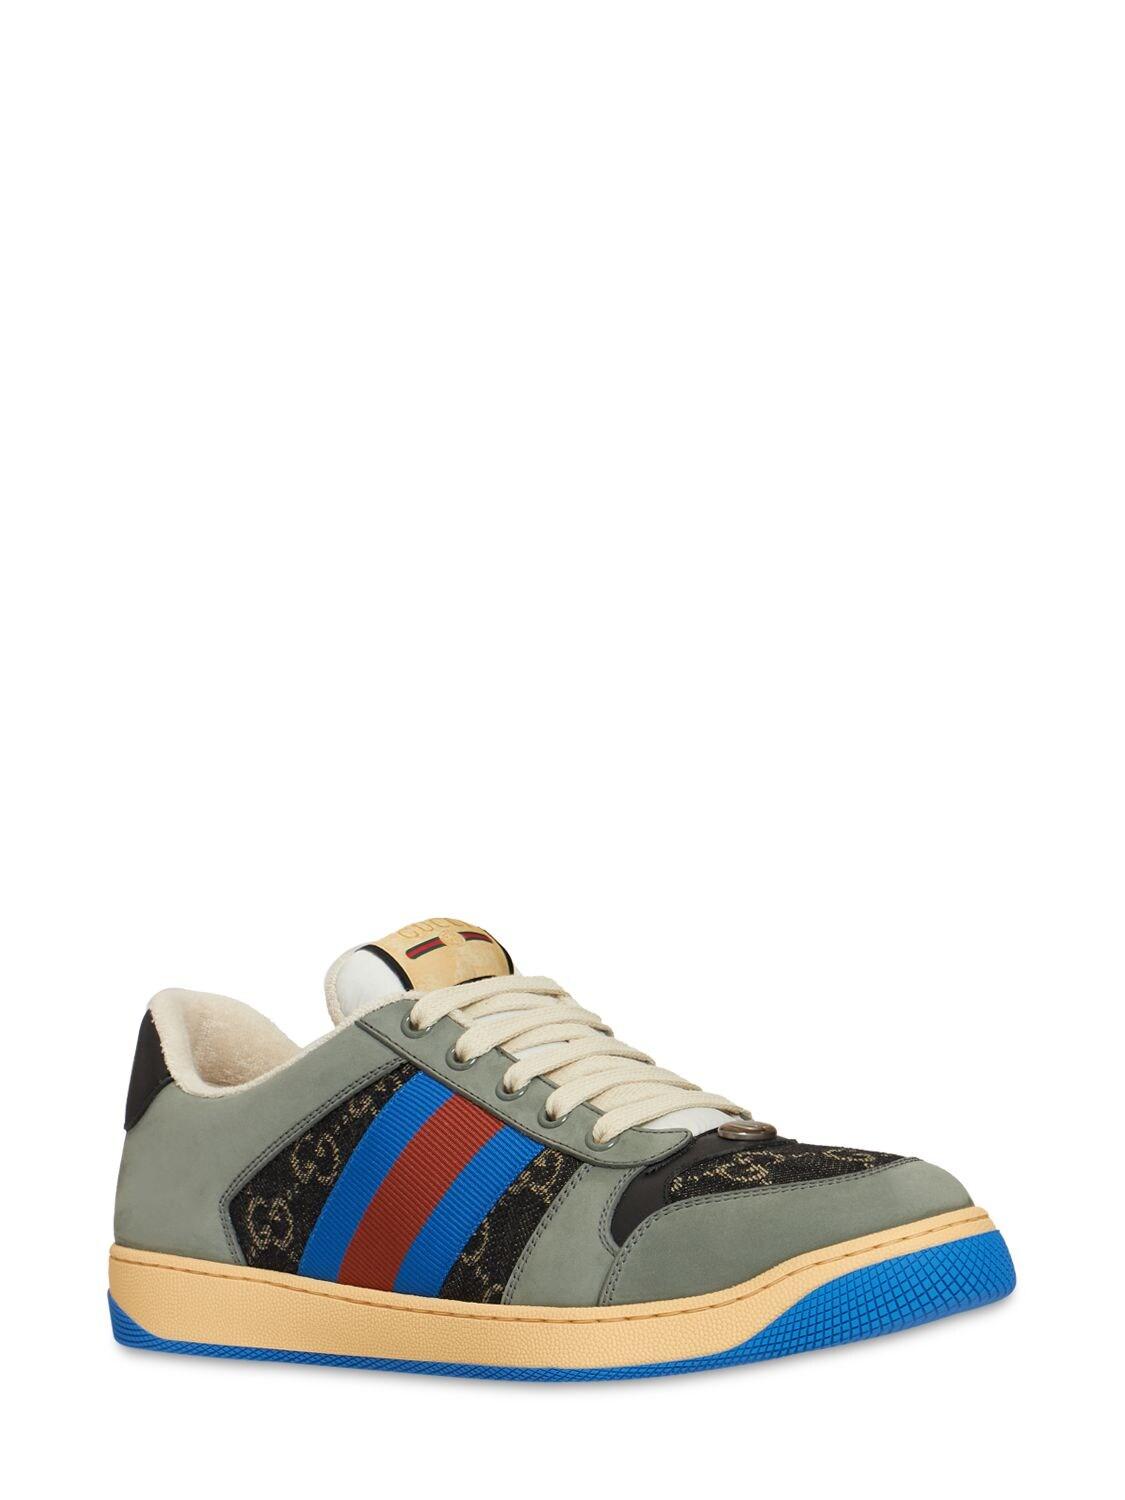 Gucci Screener Gg Denim & Leather Sneakers in Grey/Blue (Blue 